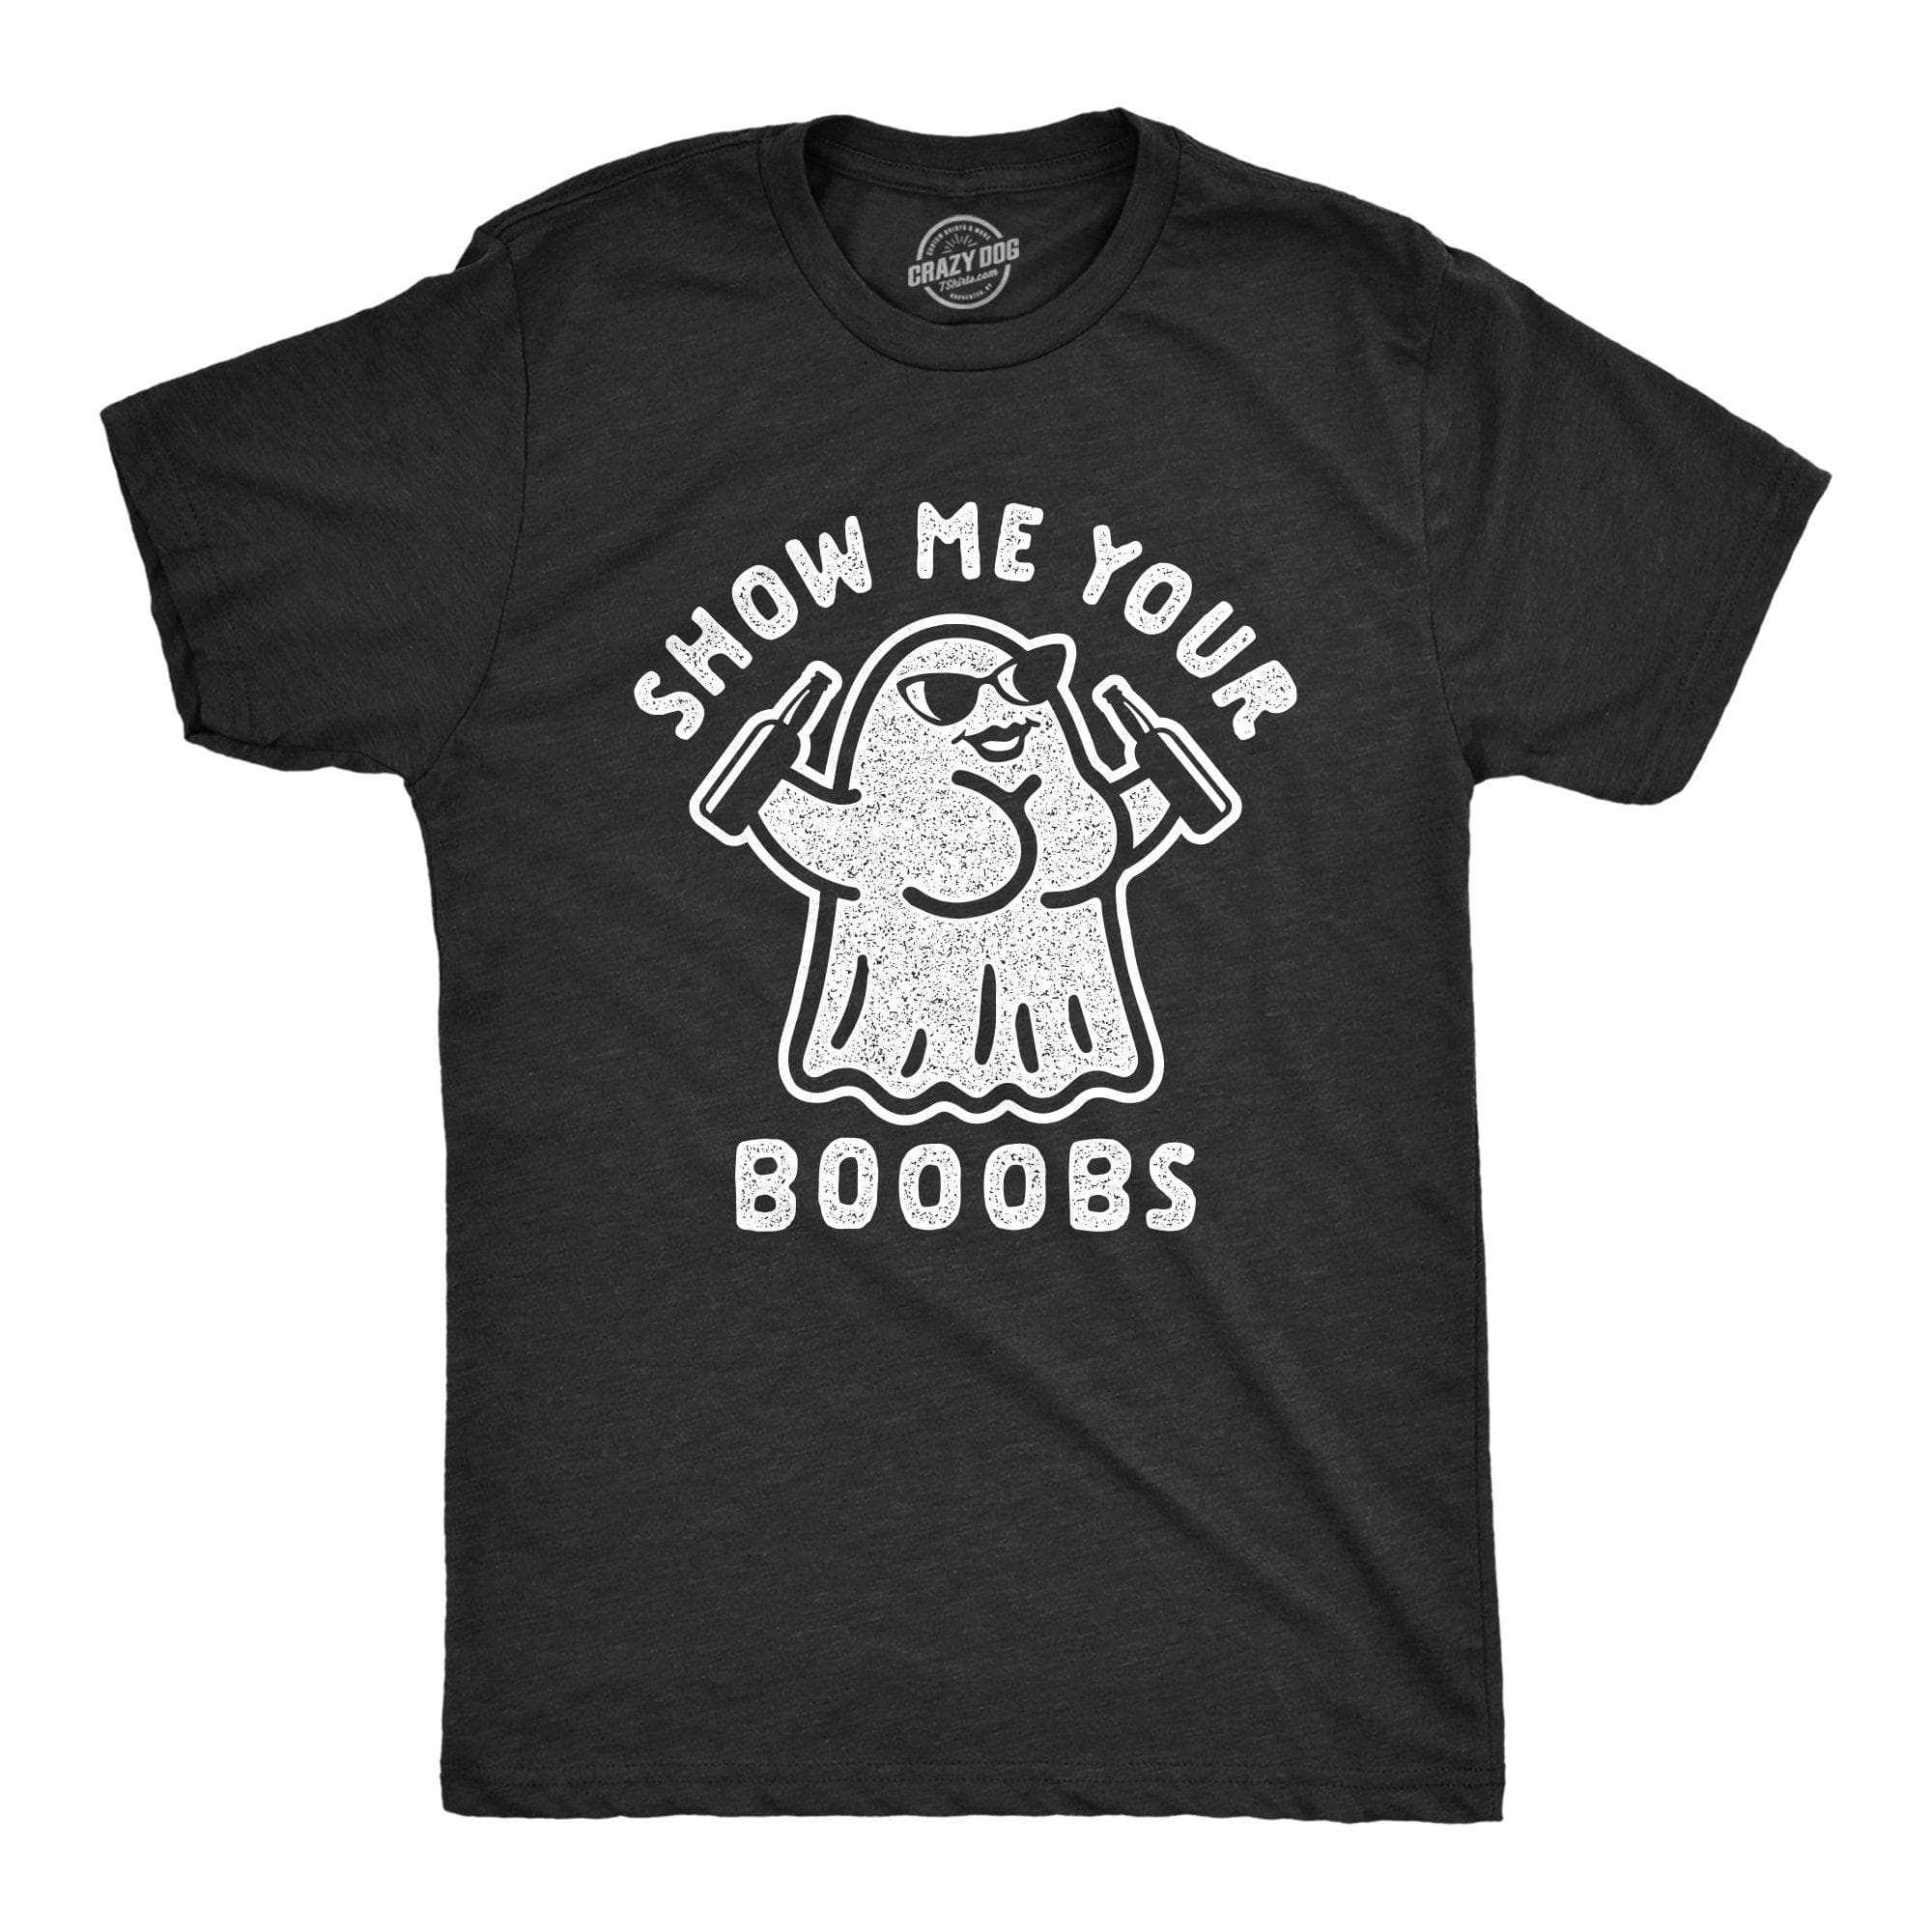 Show Me Your Booobs Men's Tshirt - Crazy Dog T-Shirts